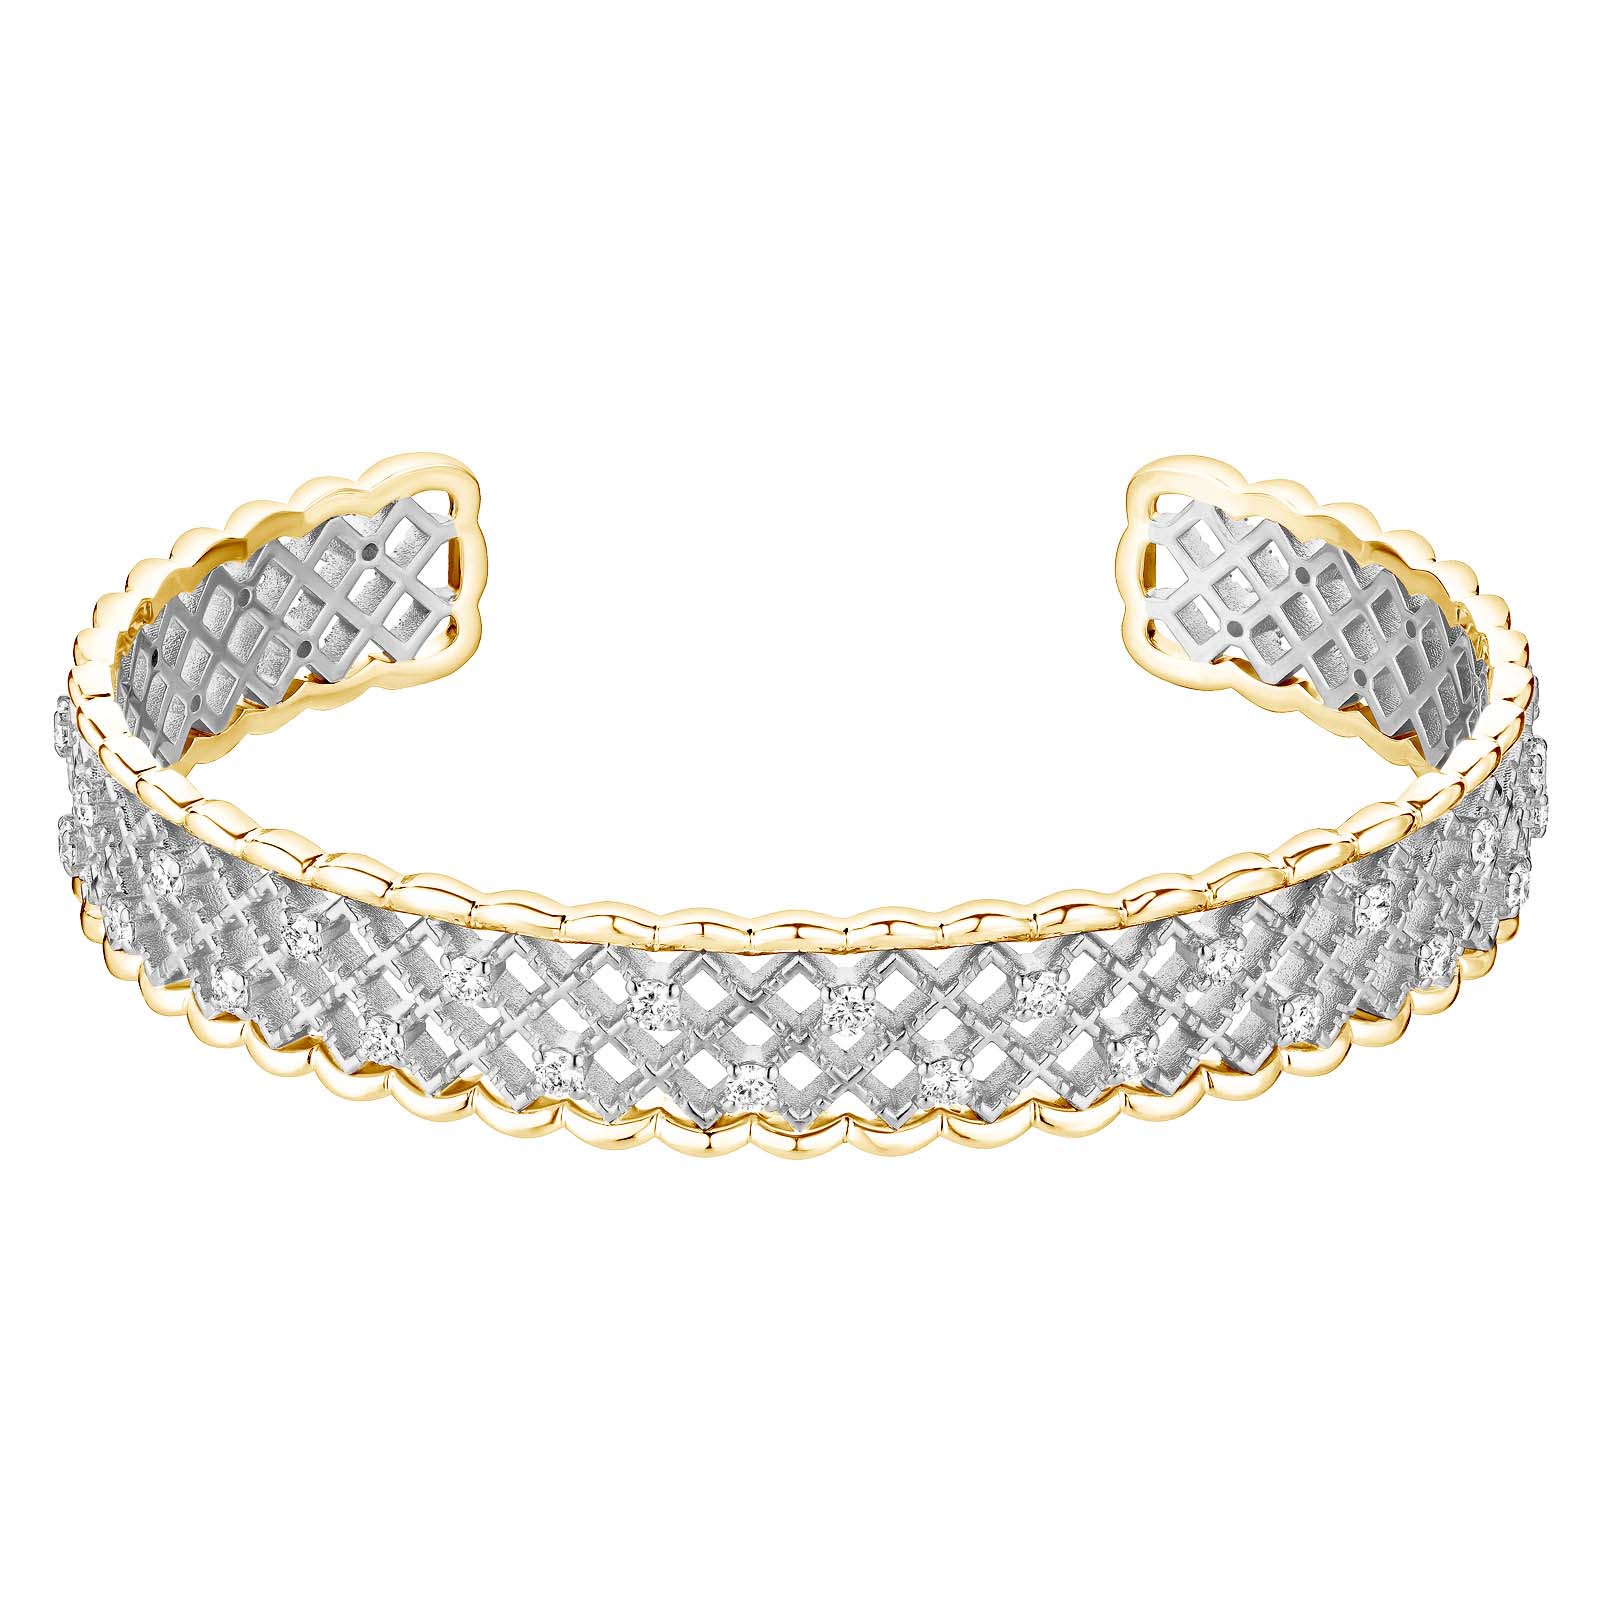 Bracelet White and yellow gold Diamond RétroMilano 1